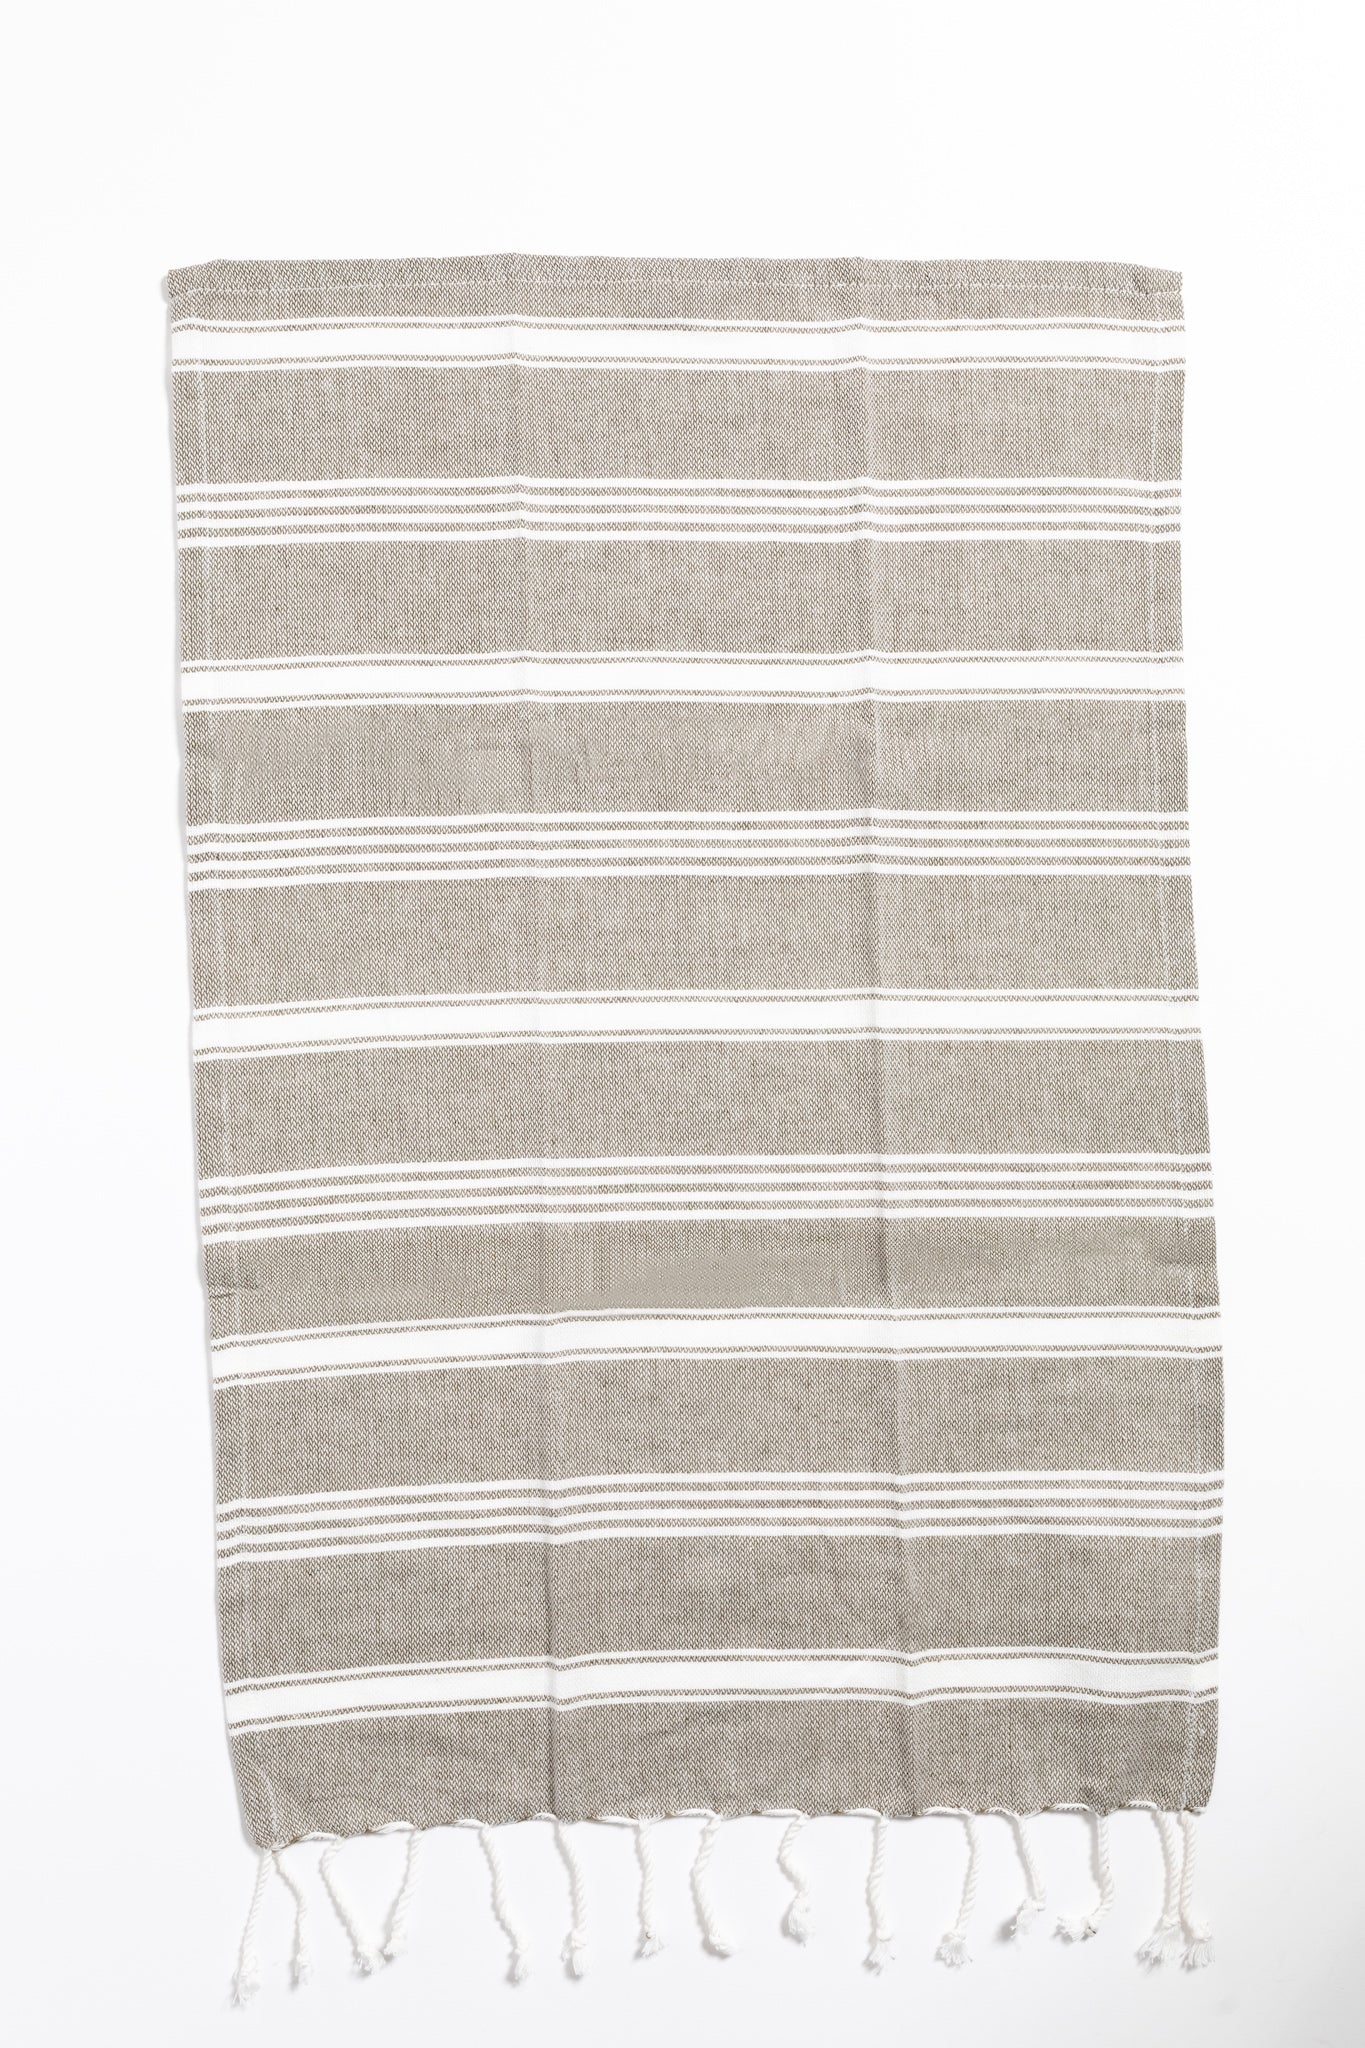 Koba Woven Cotton Striped Tea Towel w Tassels - Grey + White